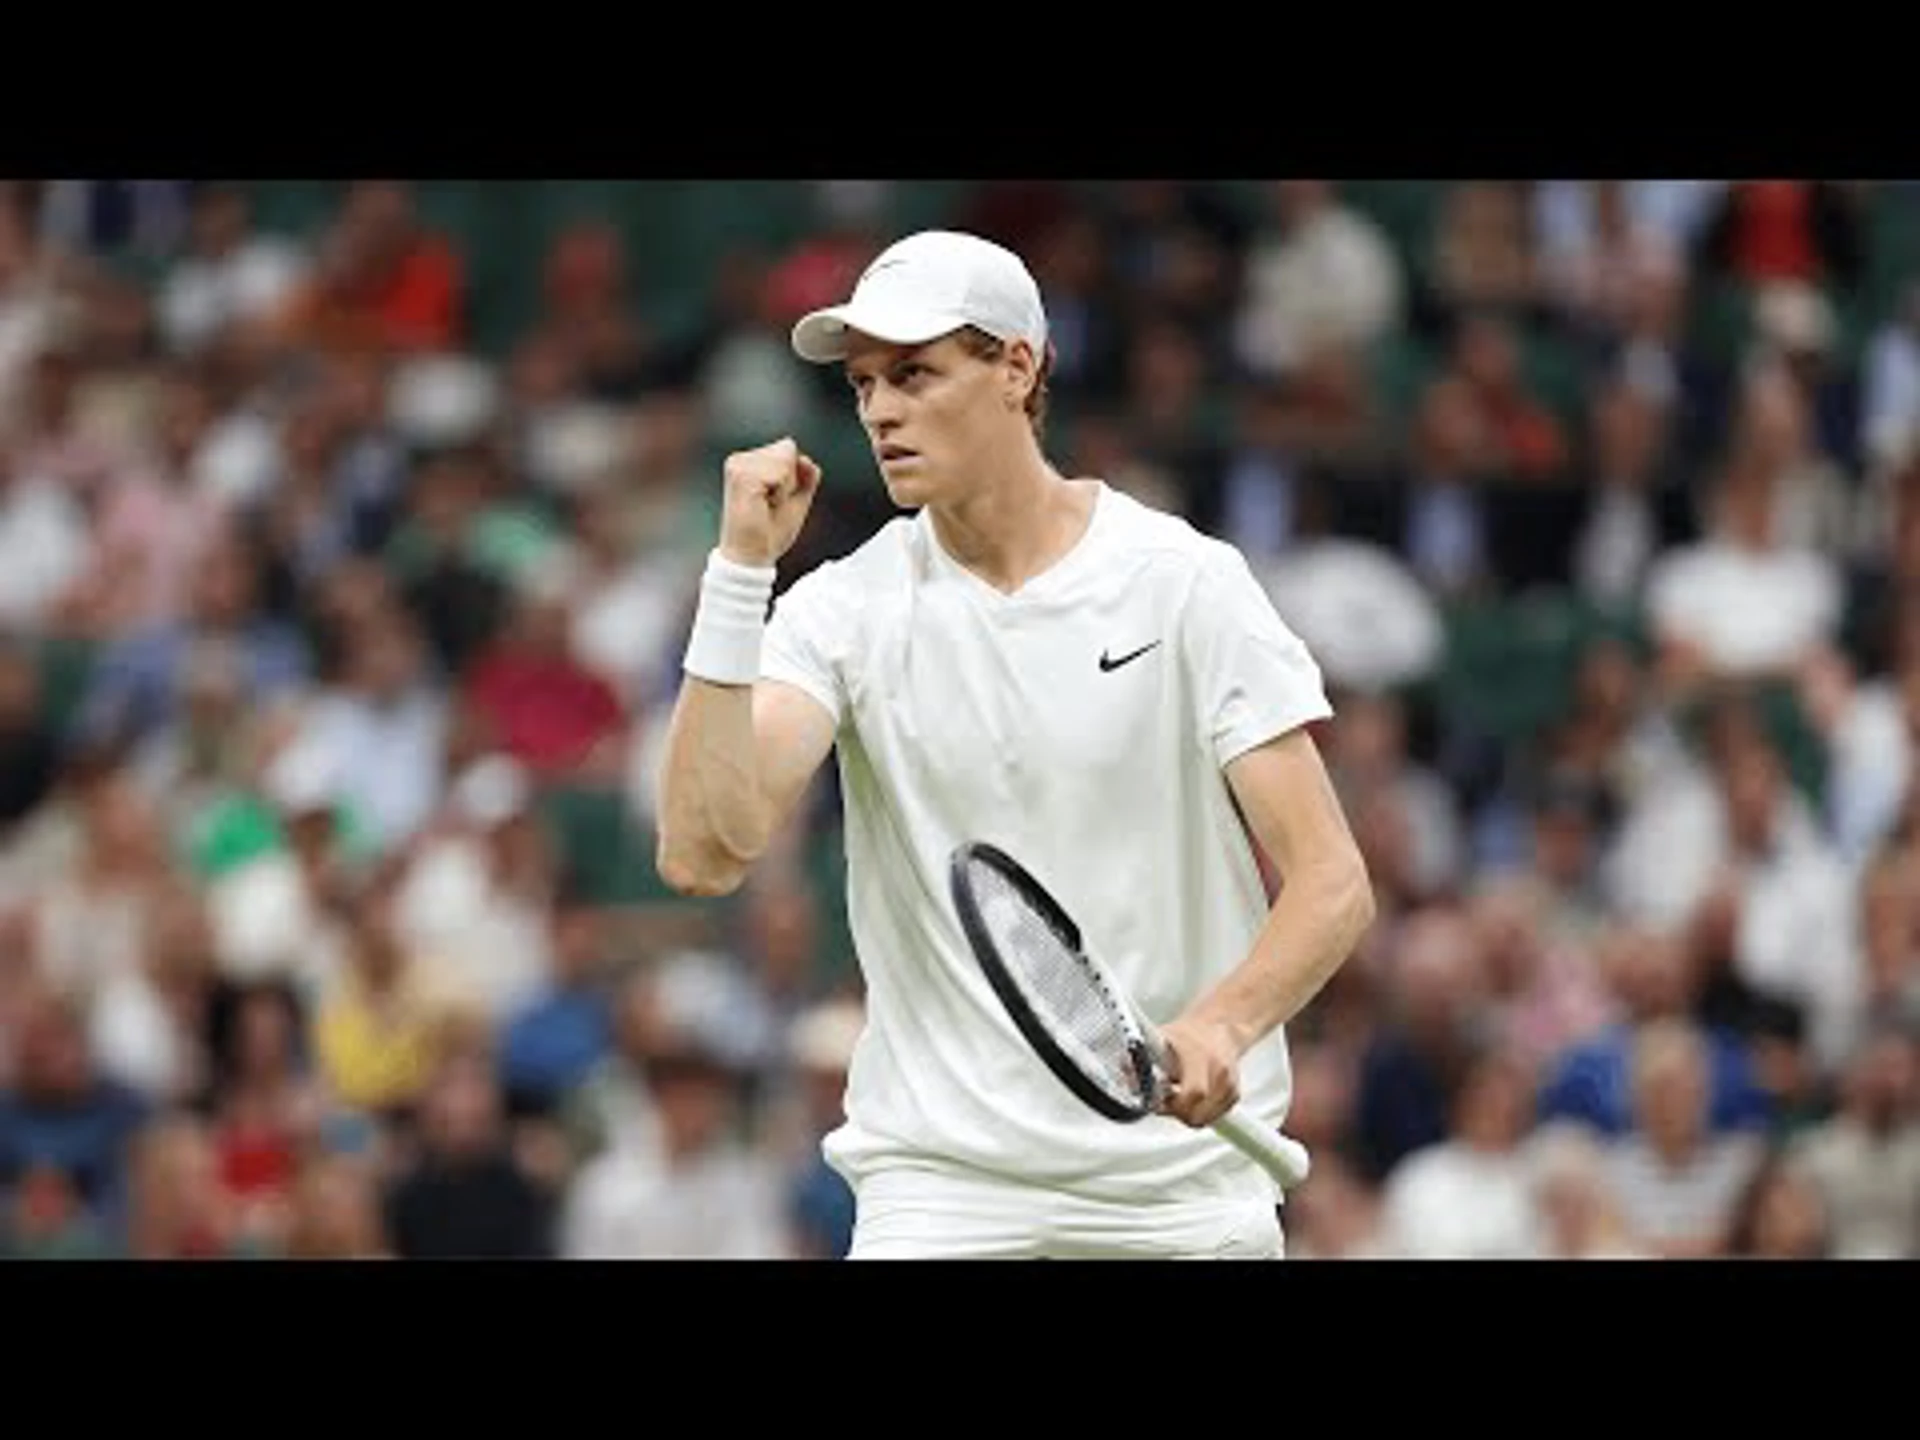 Jannik Sinner v Miomir Kecmanovic | Men's singles | 3rd Round | Highlights | Wimbledon